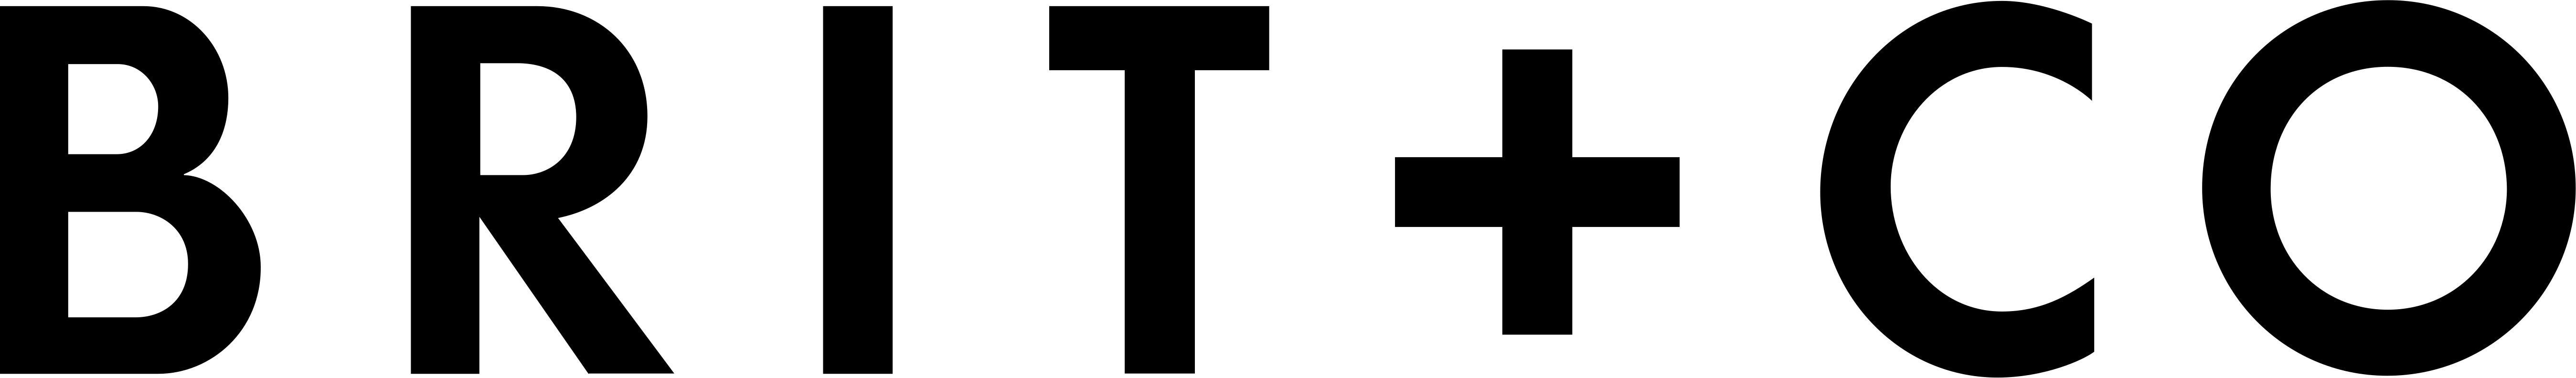 brit + co logo